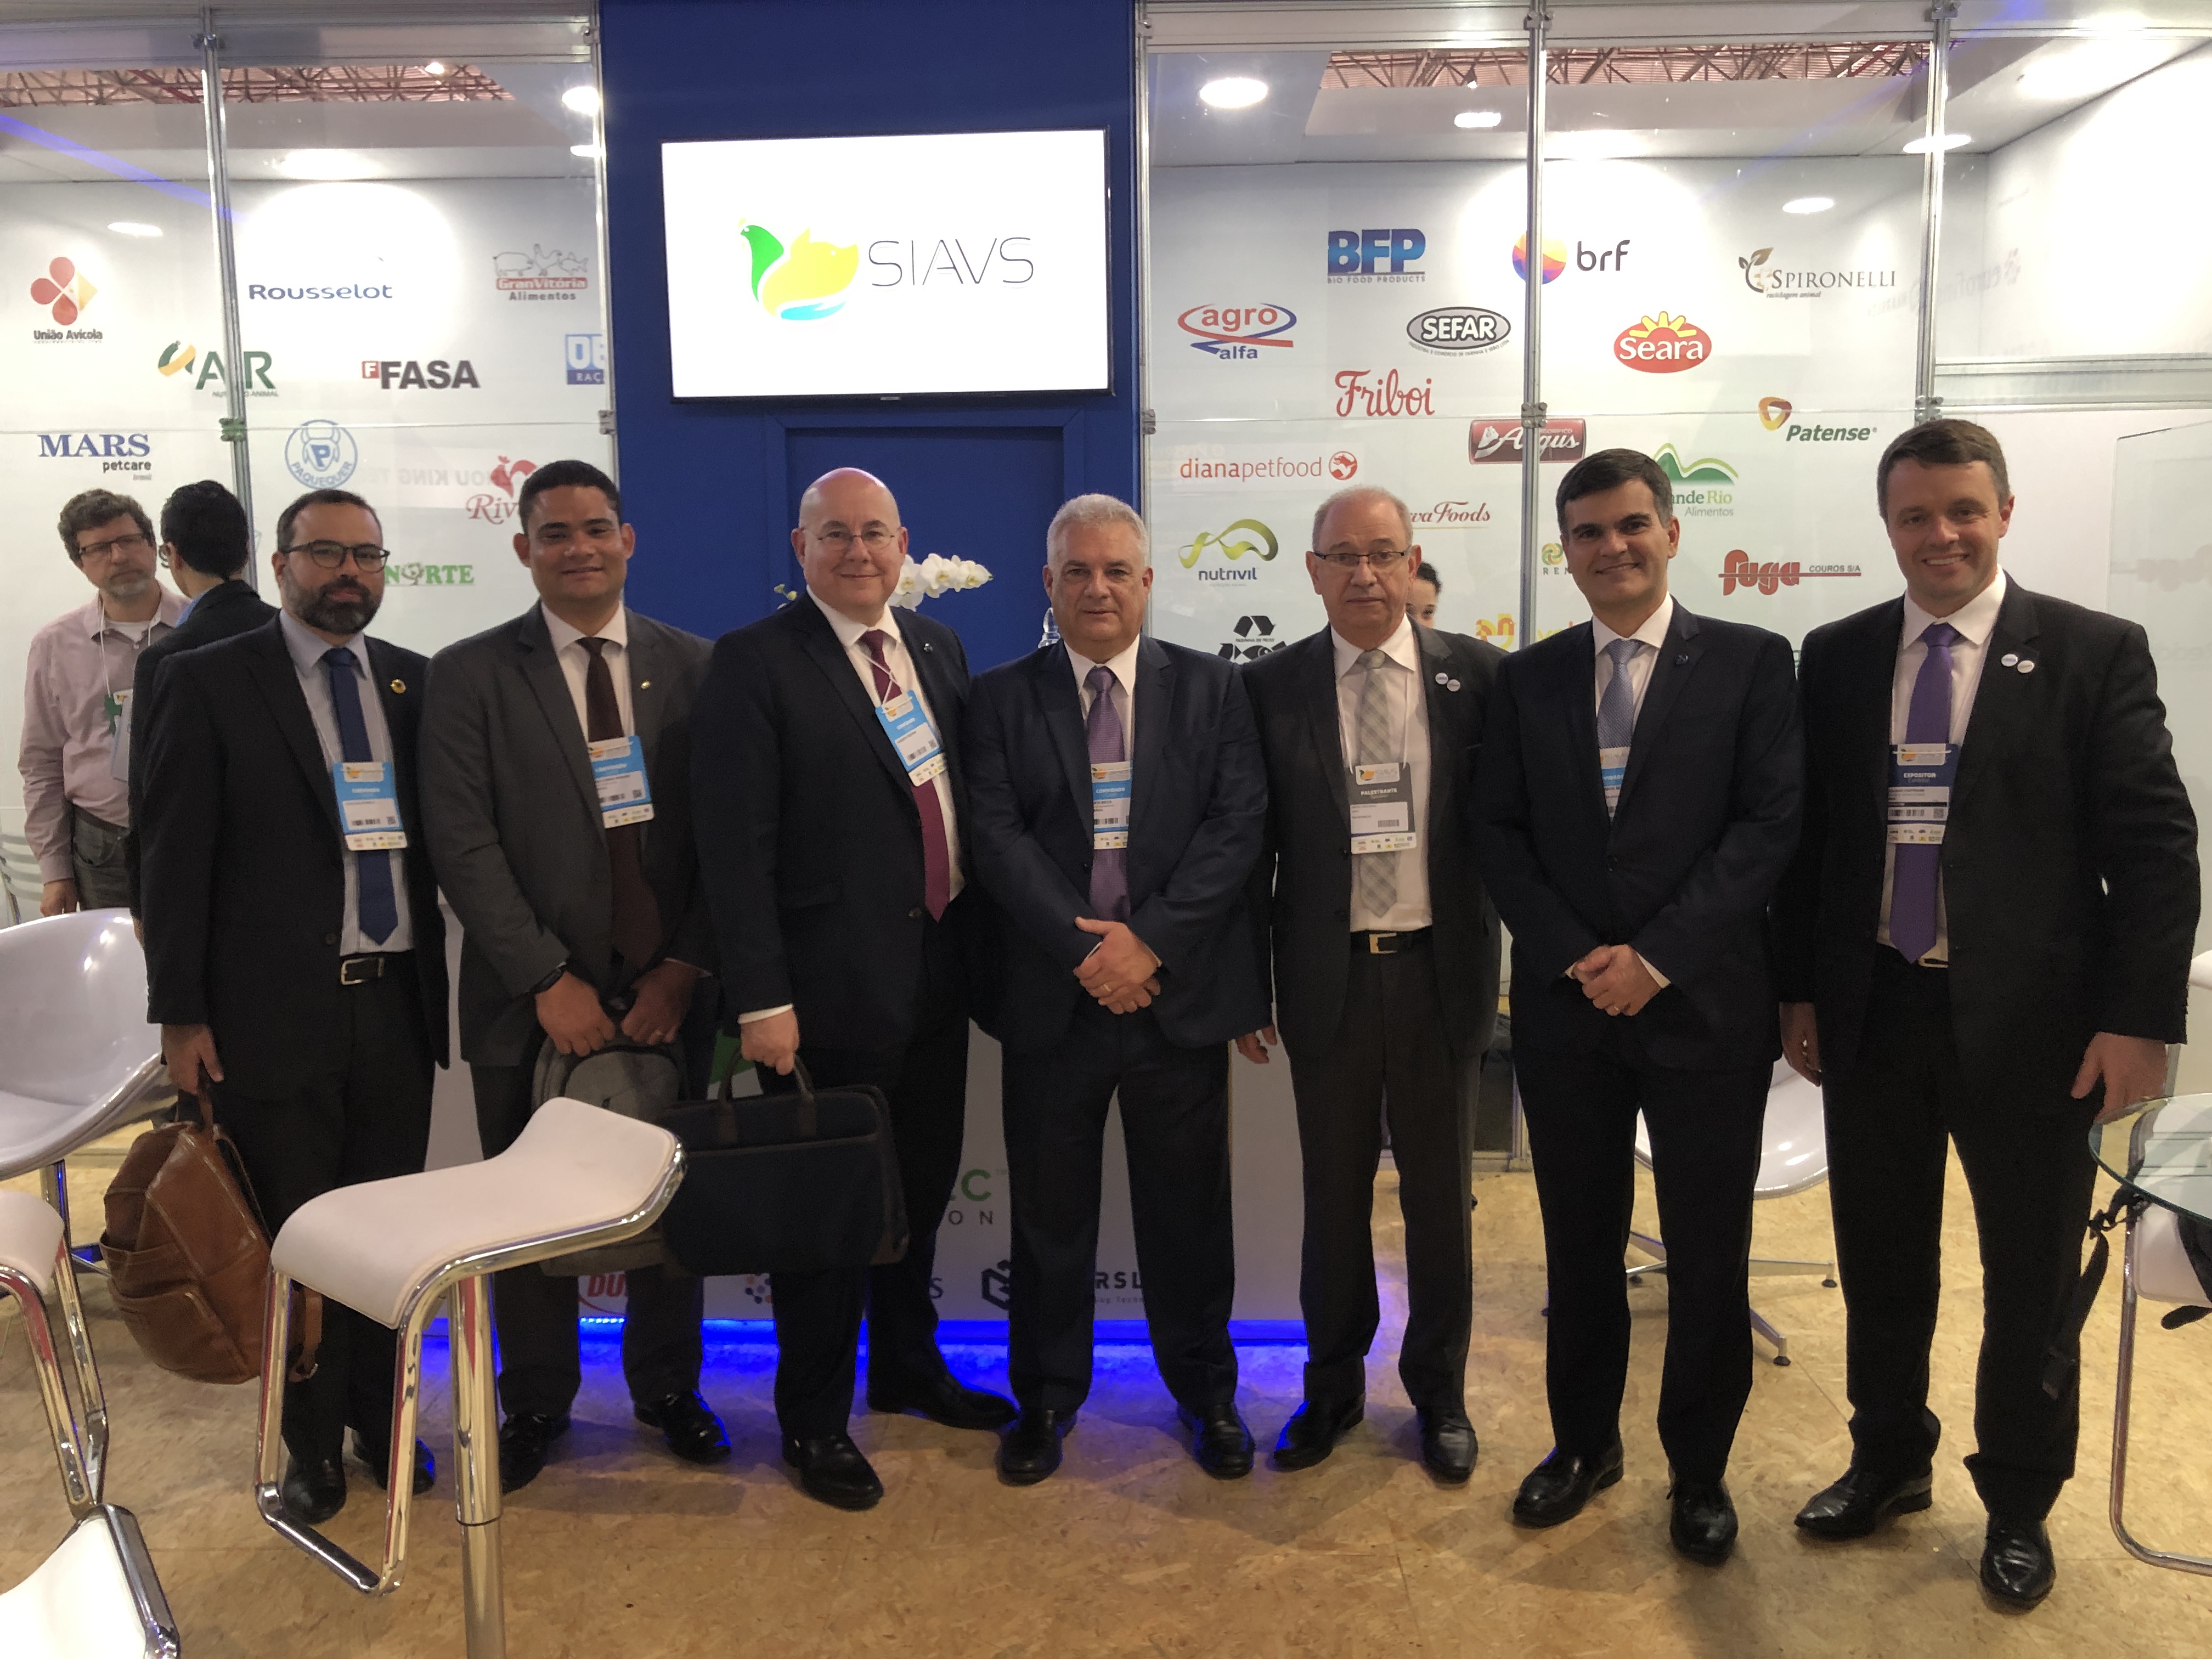 Presidente da Apex-Brasil conferiu estandes durante o SIAVS 2019